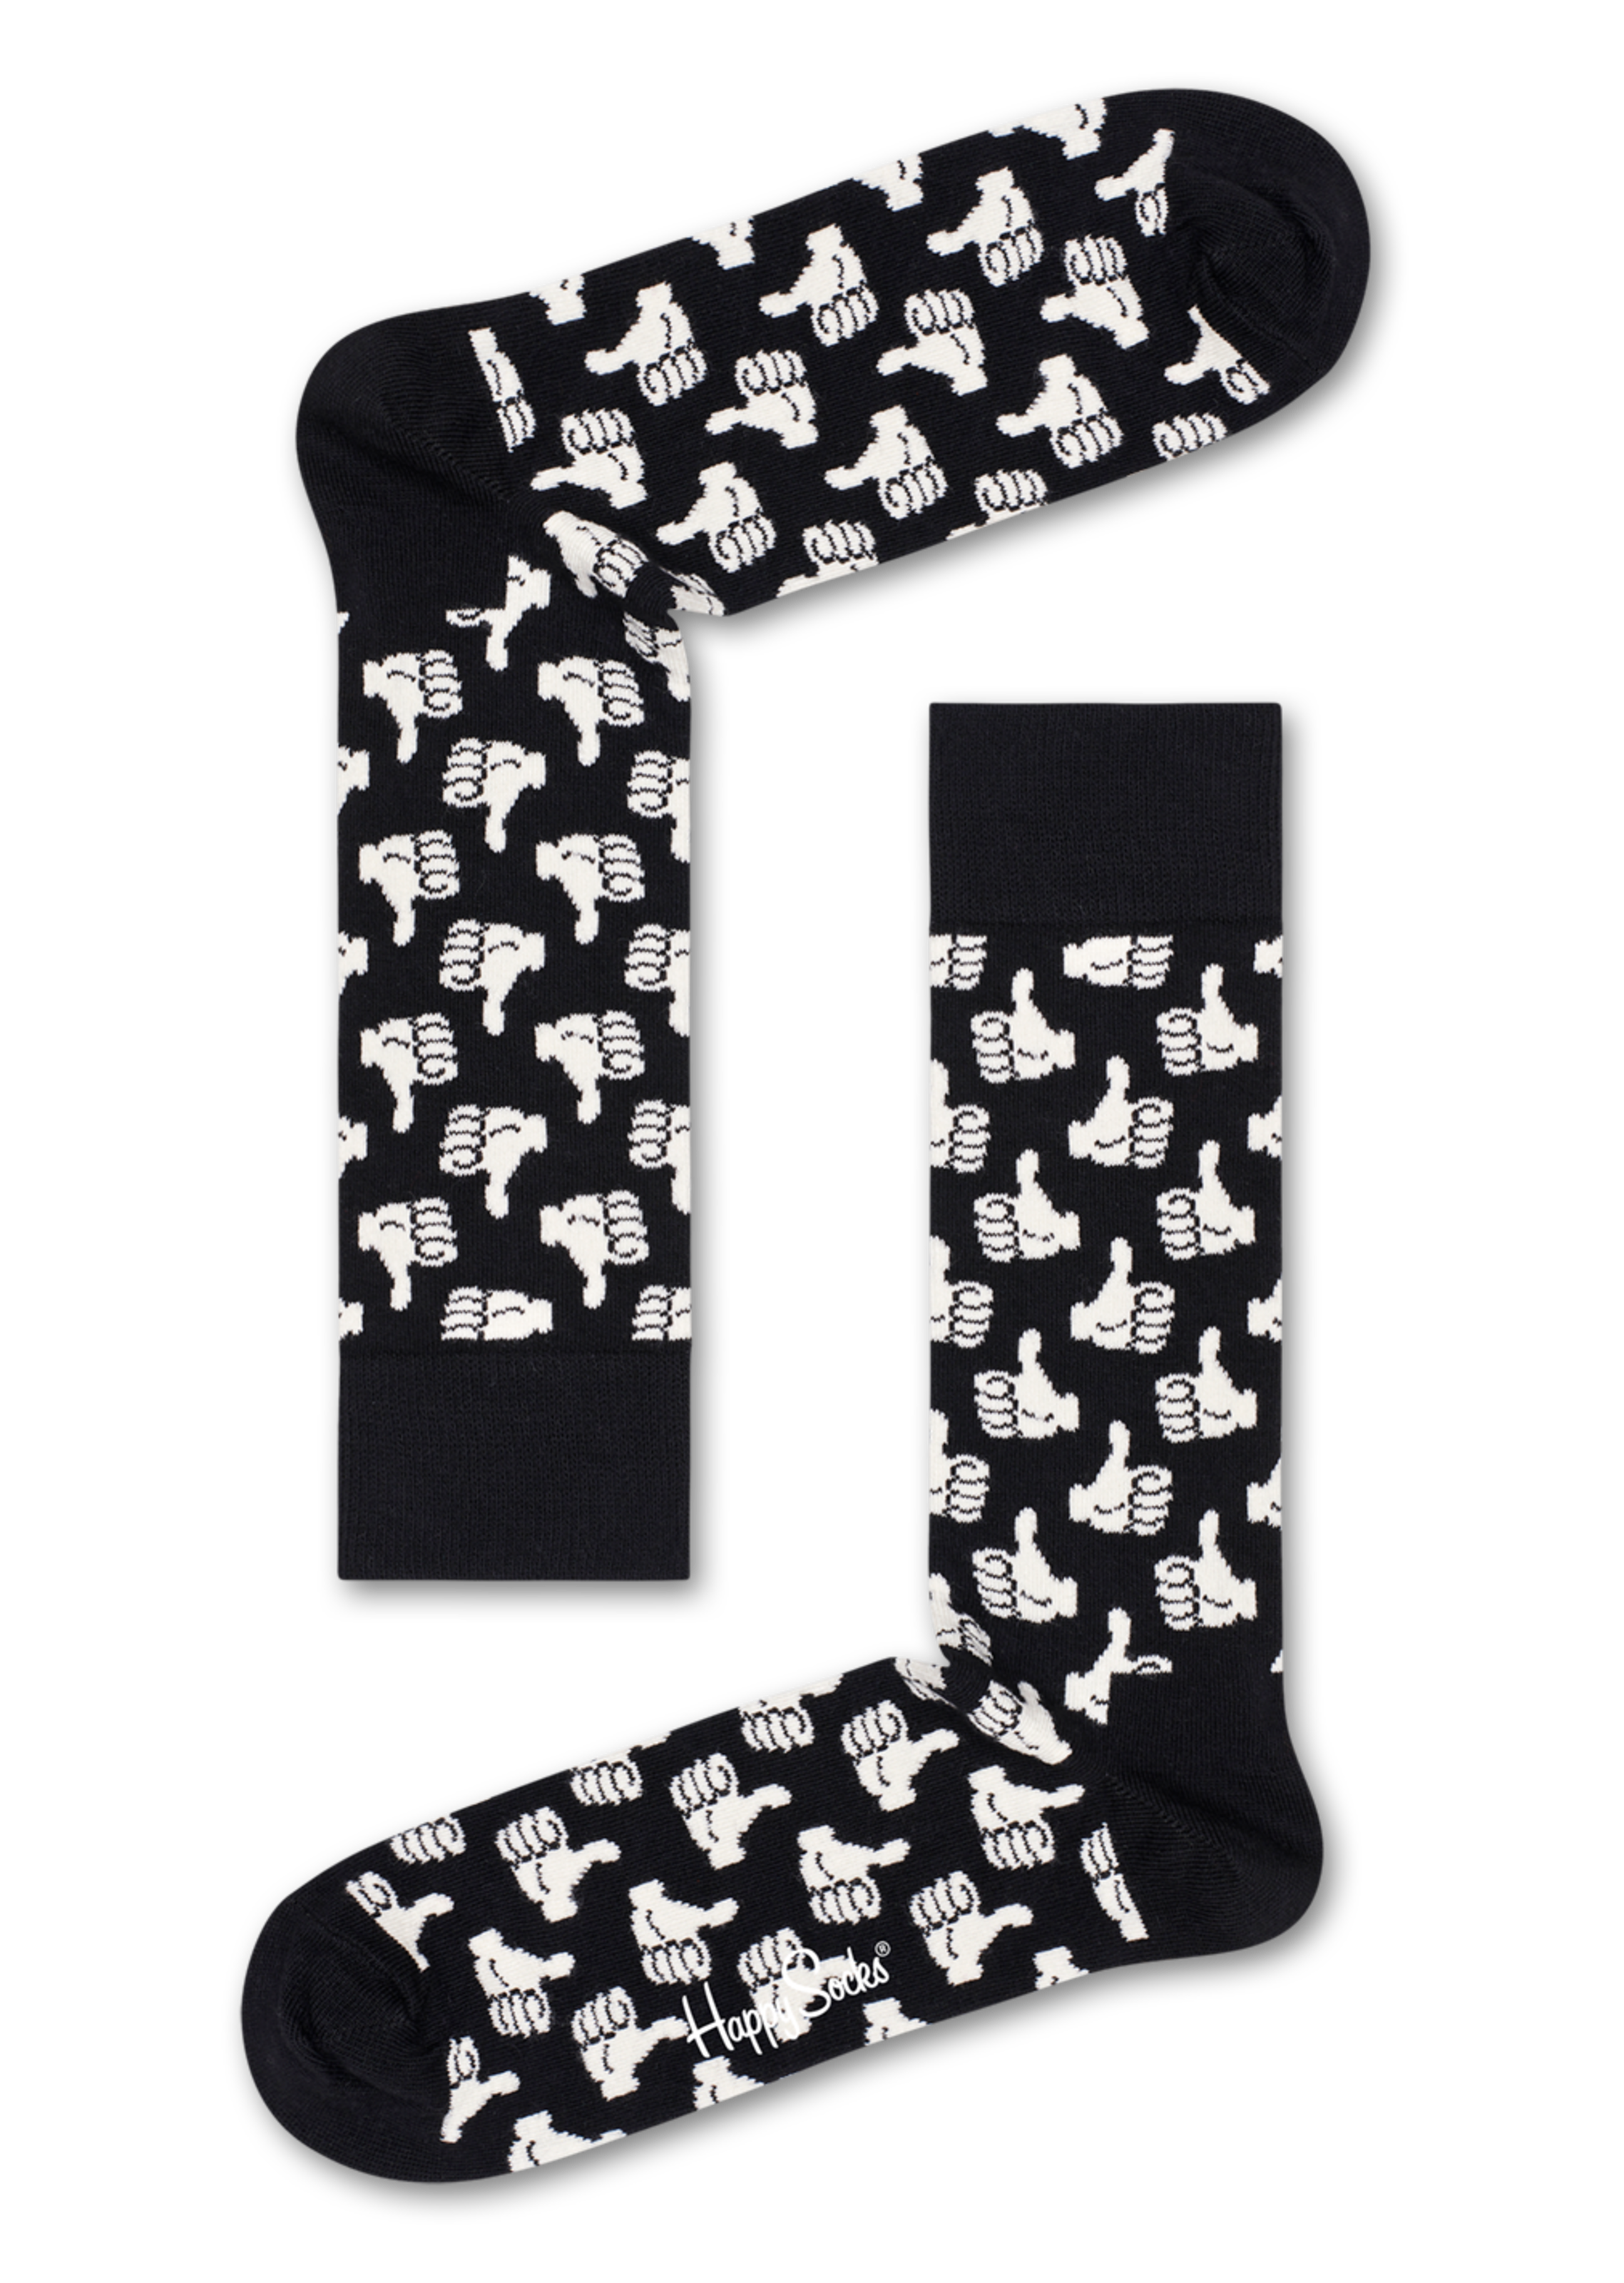 Black And White Socks Gift Box | Happy Socks US